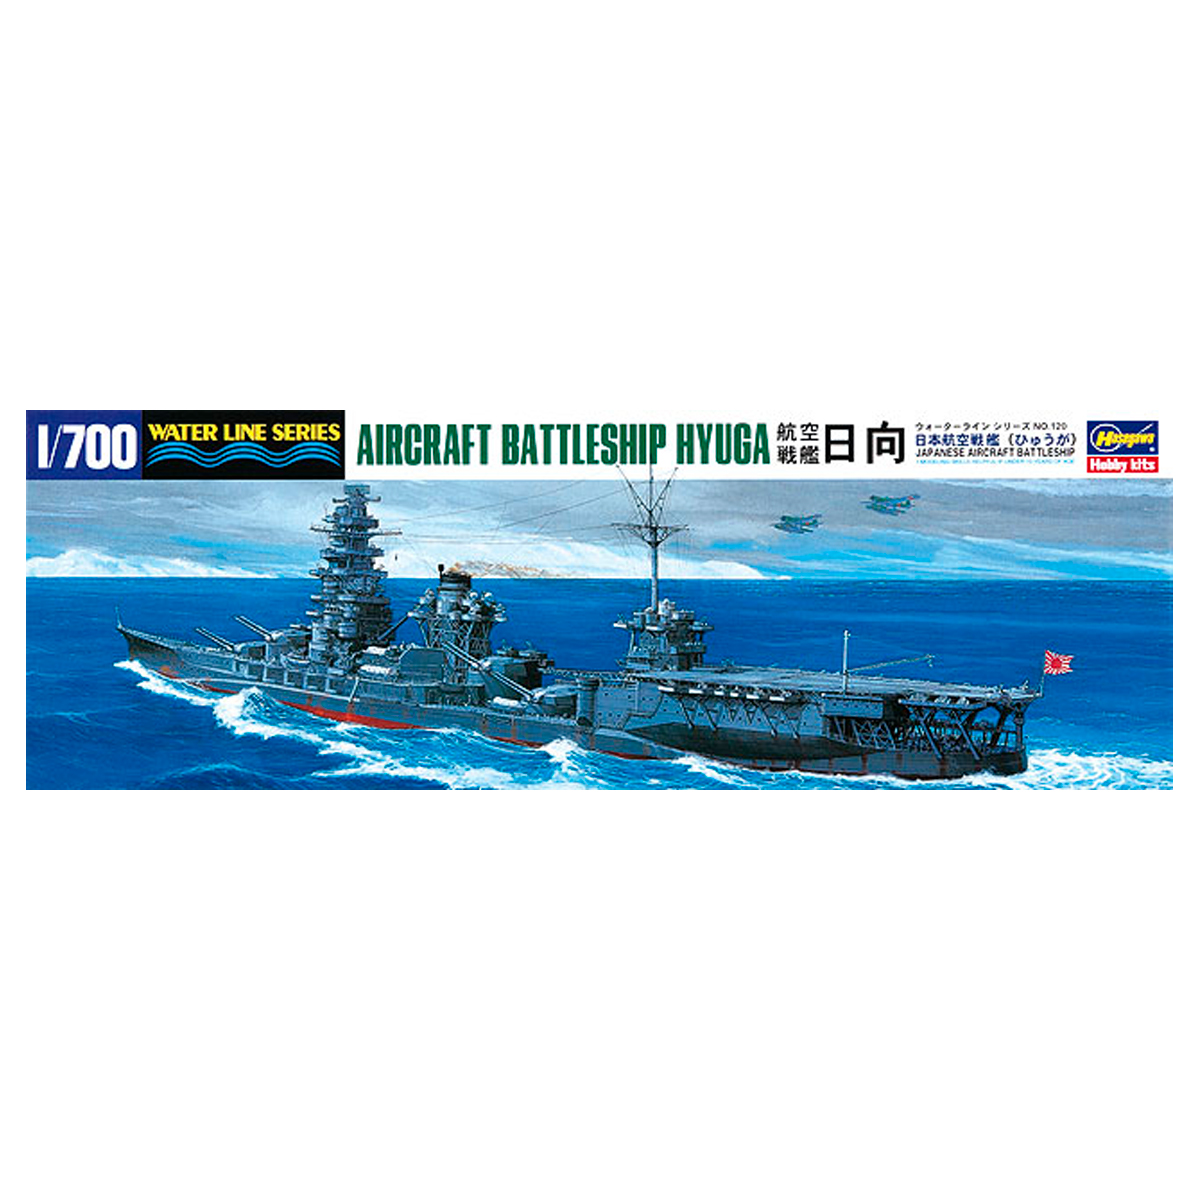 WL120-49120 1/700 Battleship Hyuga